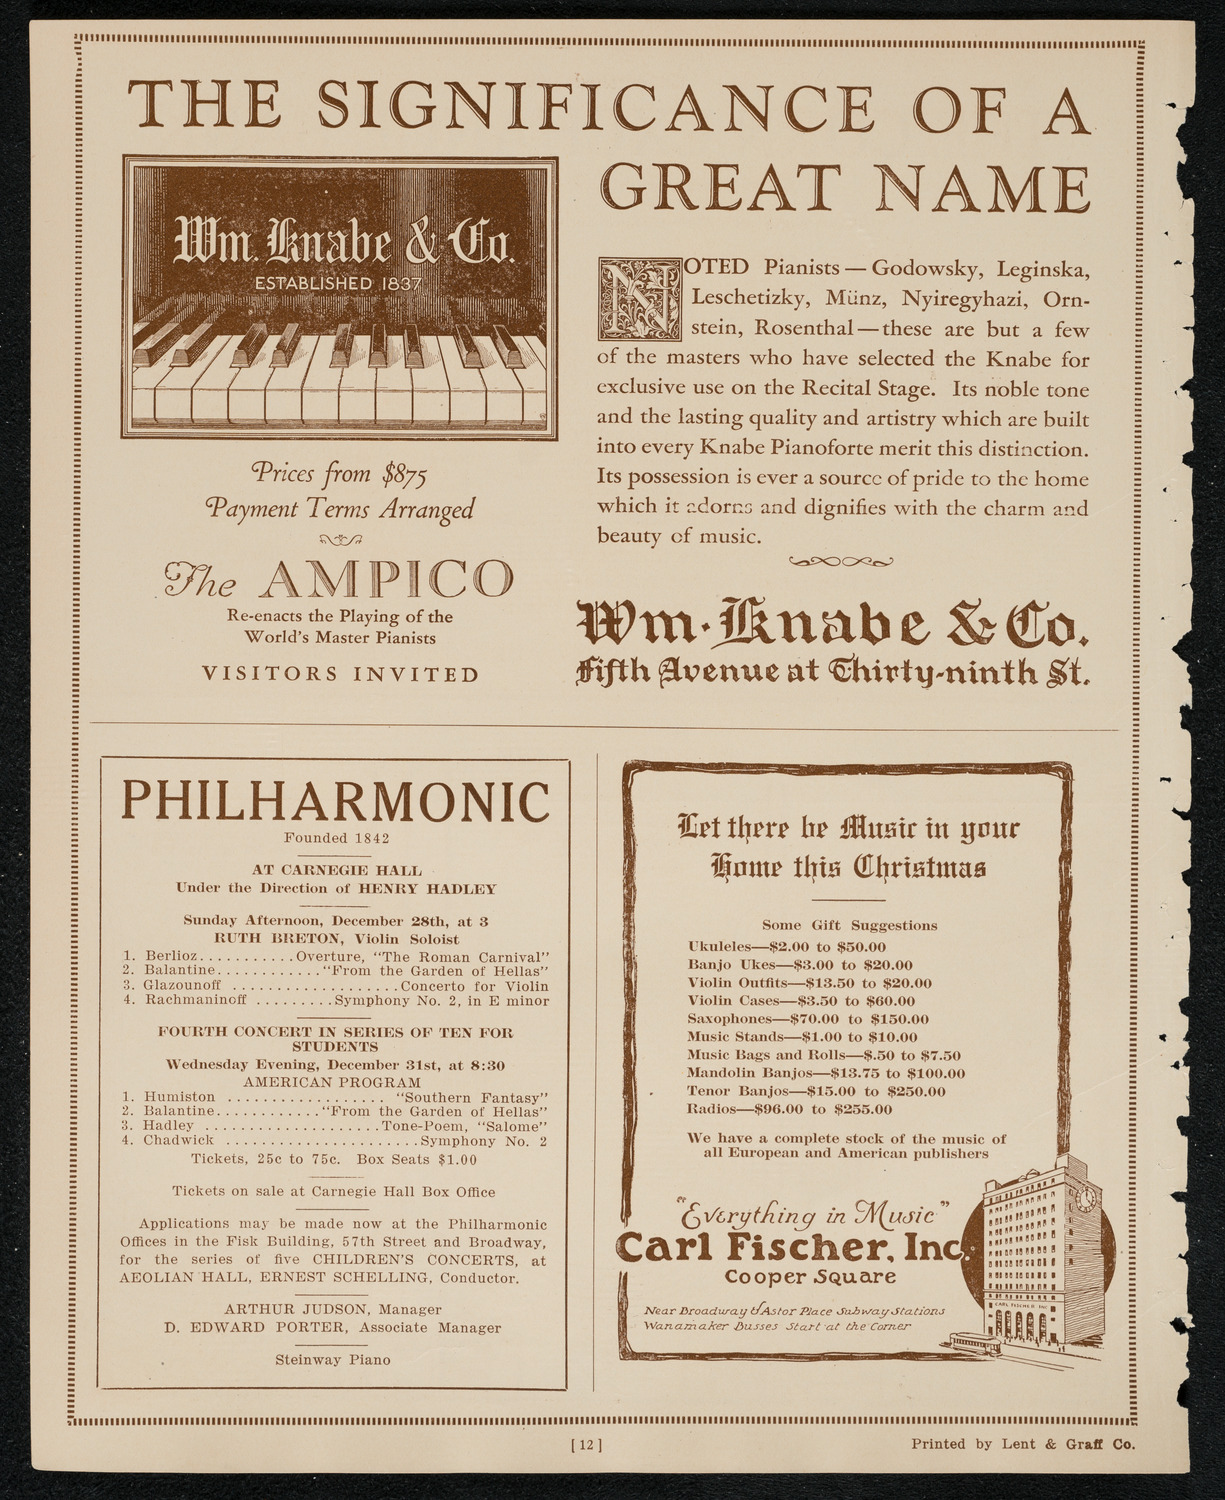 State Symphony Orchestra of New York, December 21, 1924, program page 12